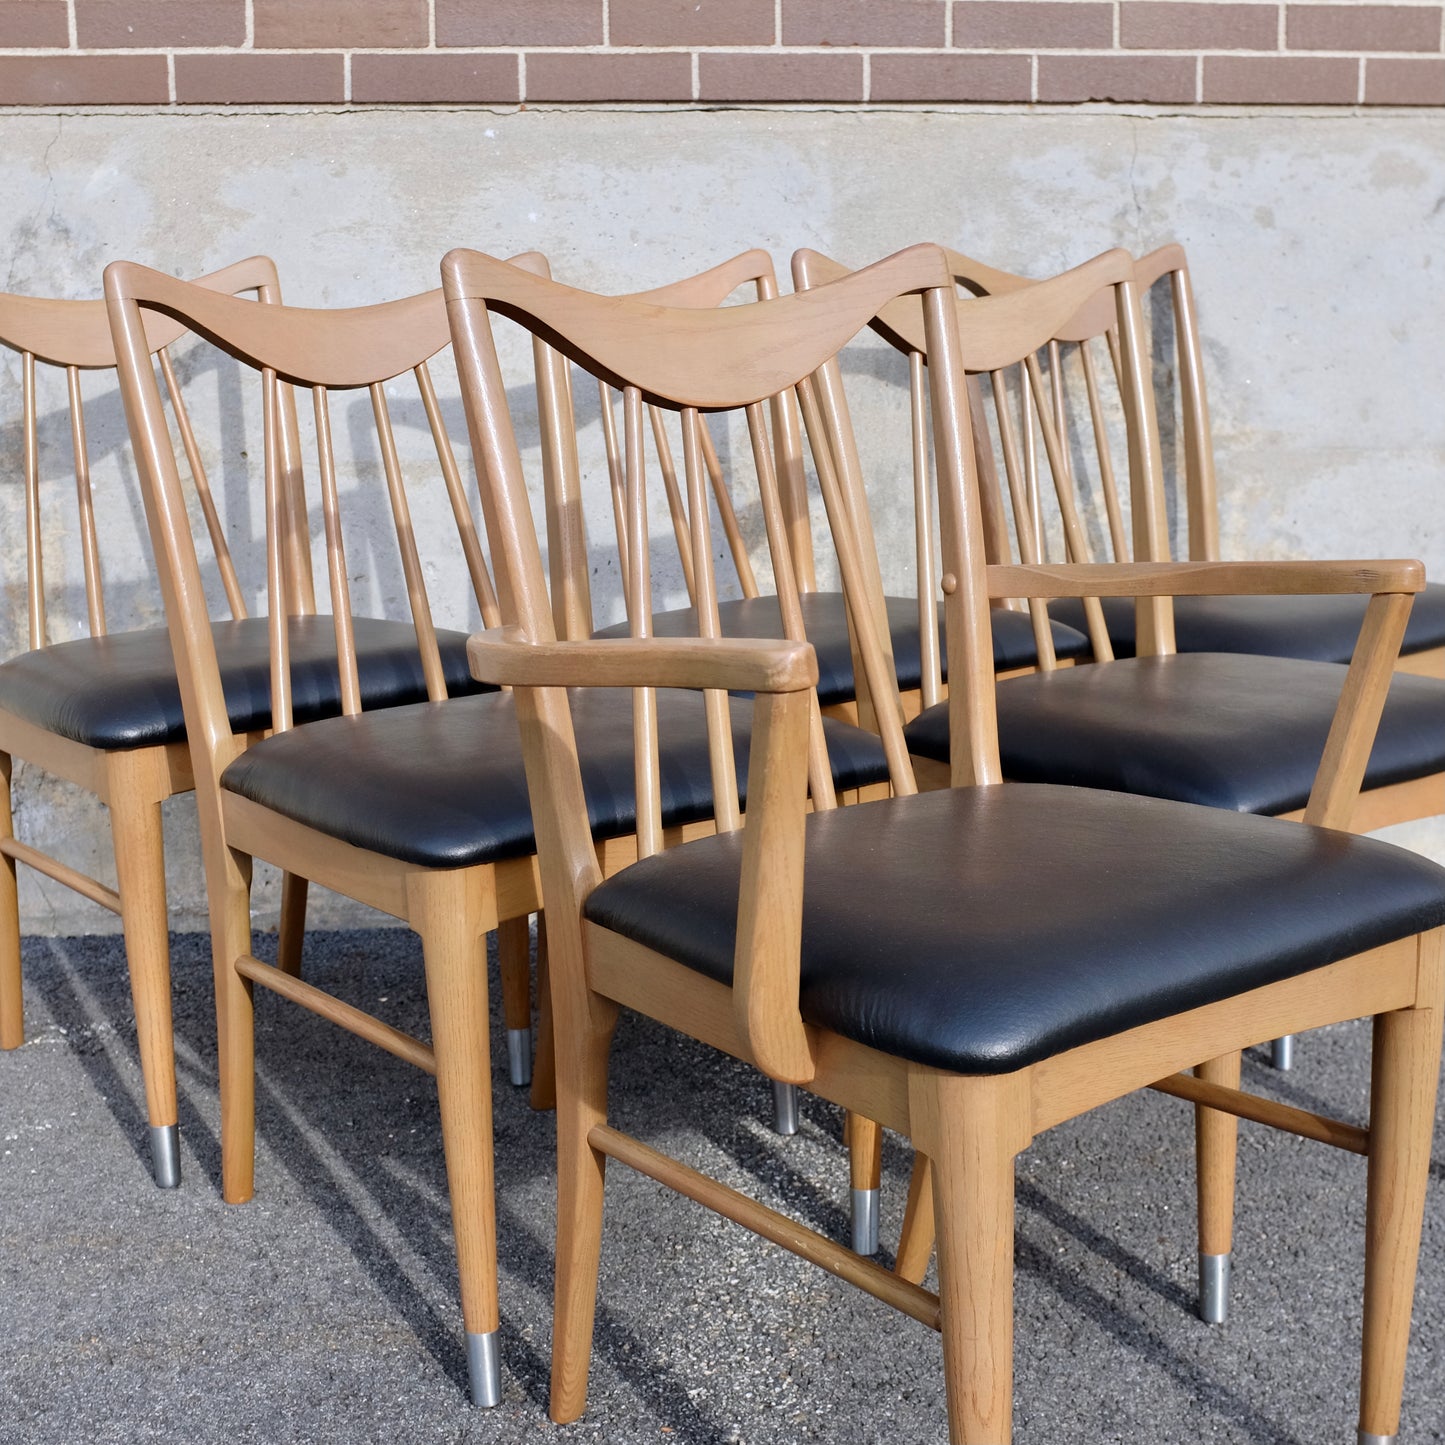 Keller Furniture "Valkerie" Oak Dining Chairs - Set of 6